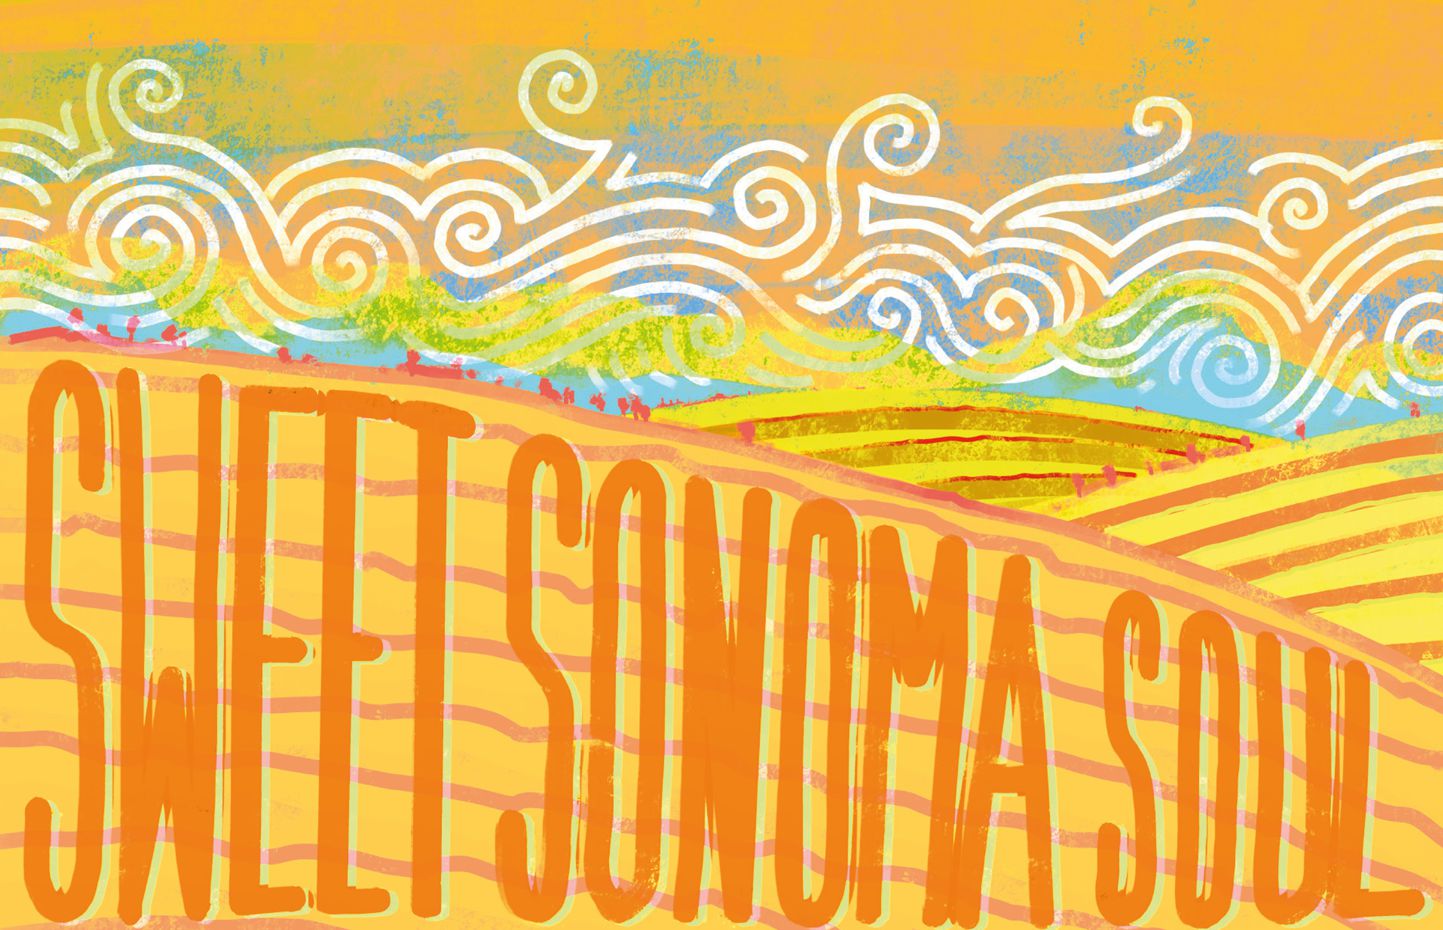 Sweet Sonoma Soul